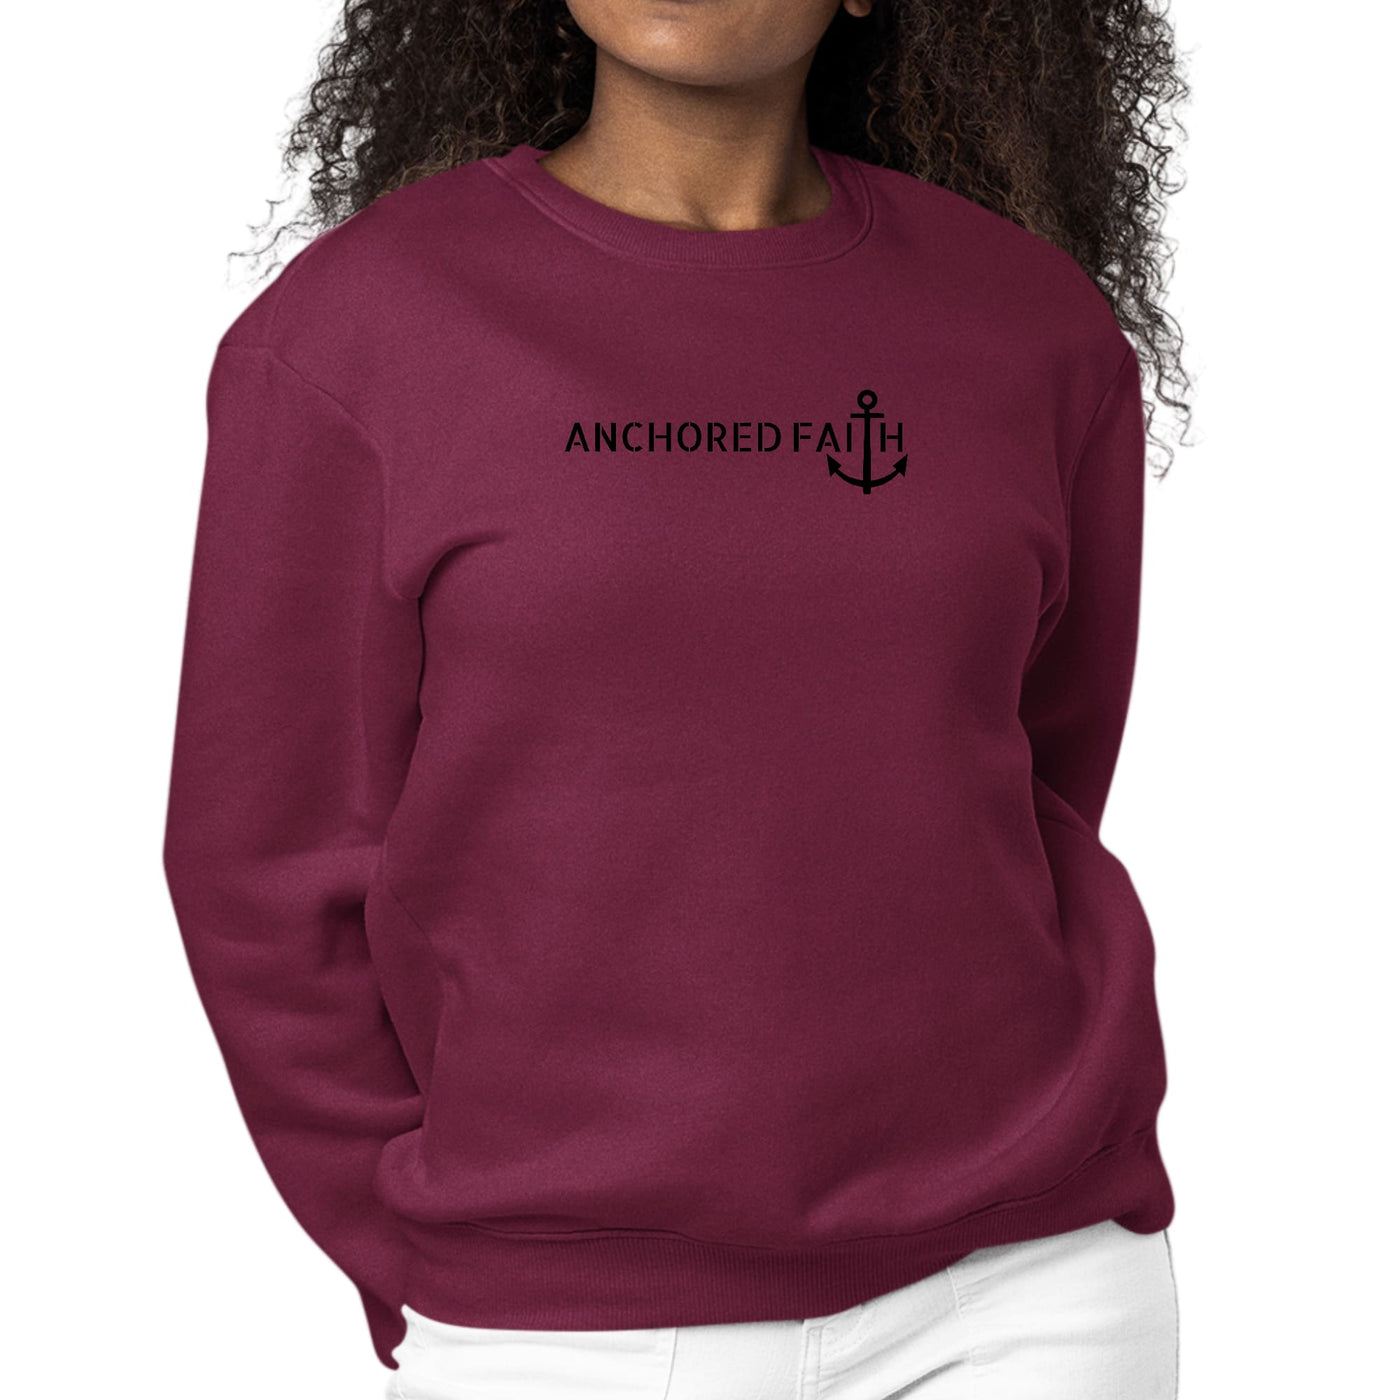 Womens Graphic Sweatshirt Anchored Faith Black Print - Sweatshirts